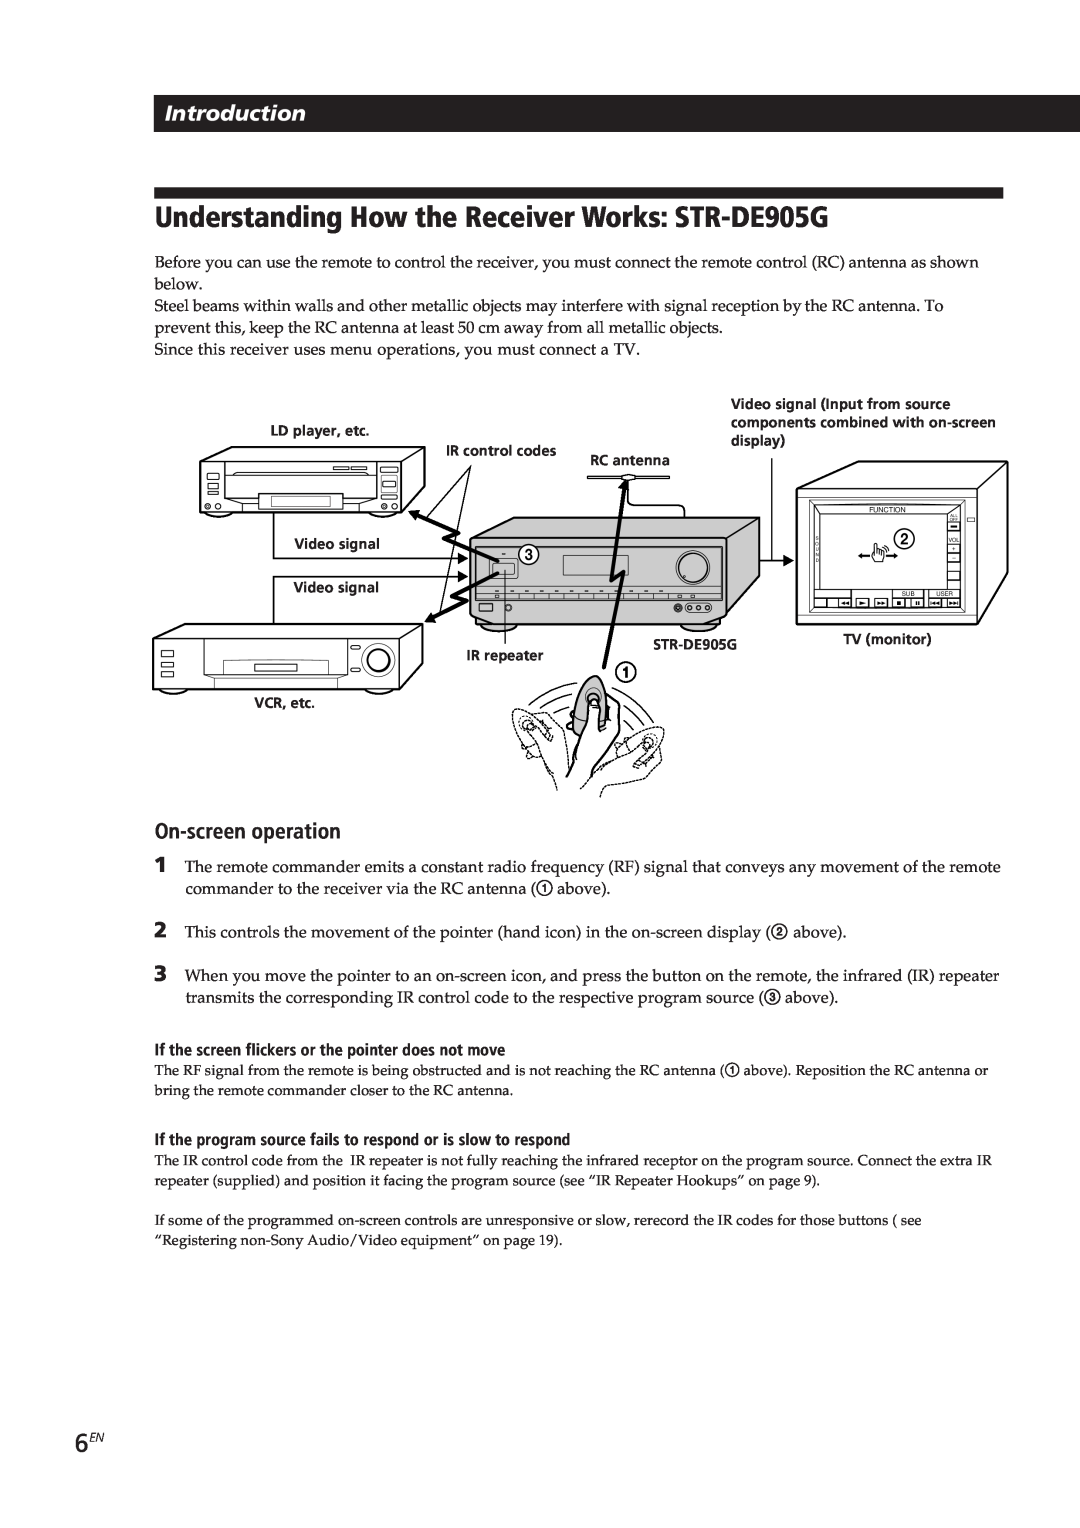 Sony STR-DE905G, STR-DE805G manual Understanding How the Receiver Works: STR-DE905G, Introduction, On-screenoperation 